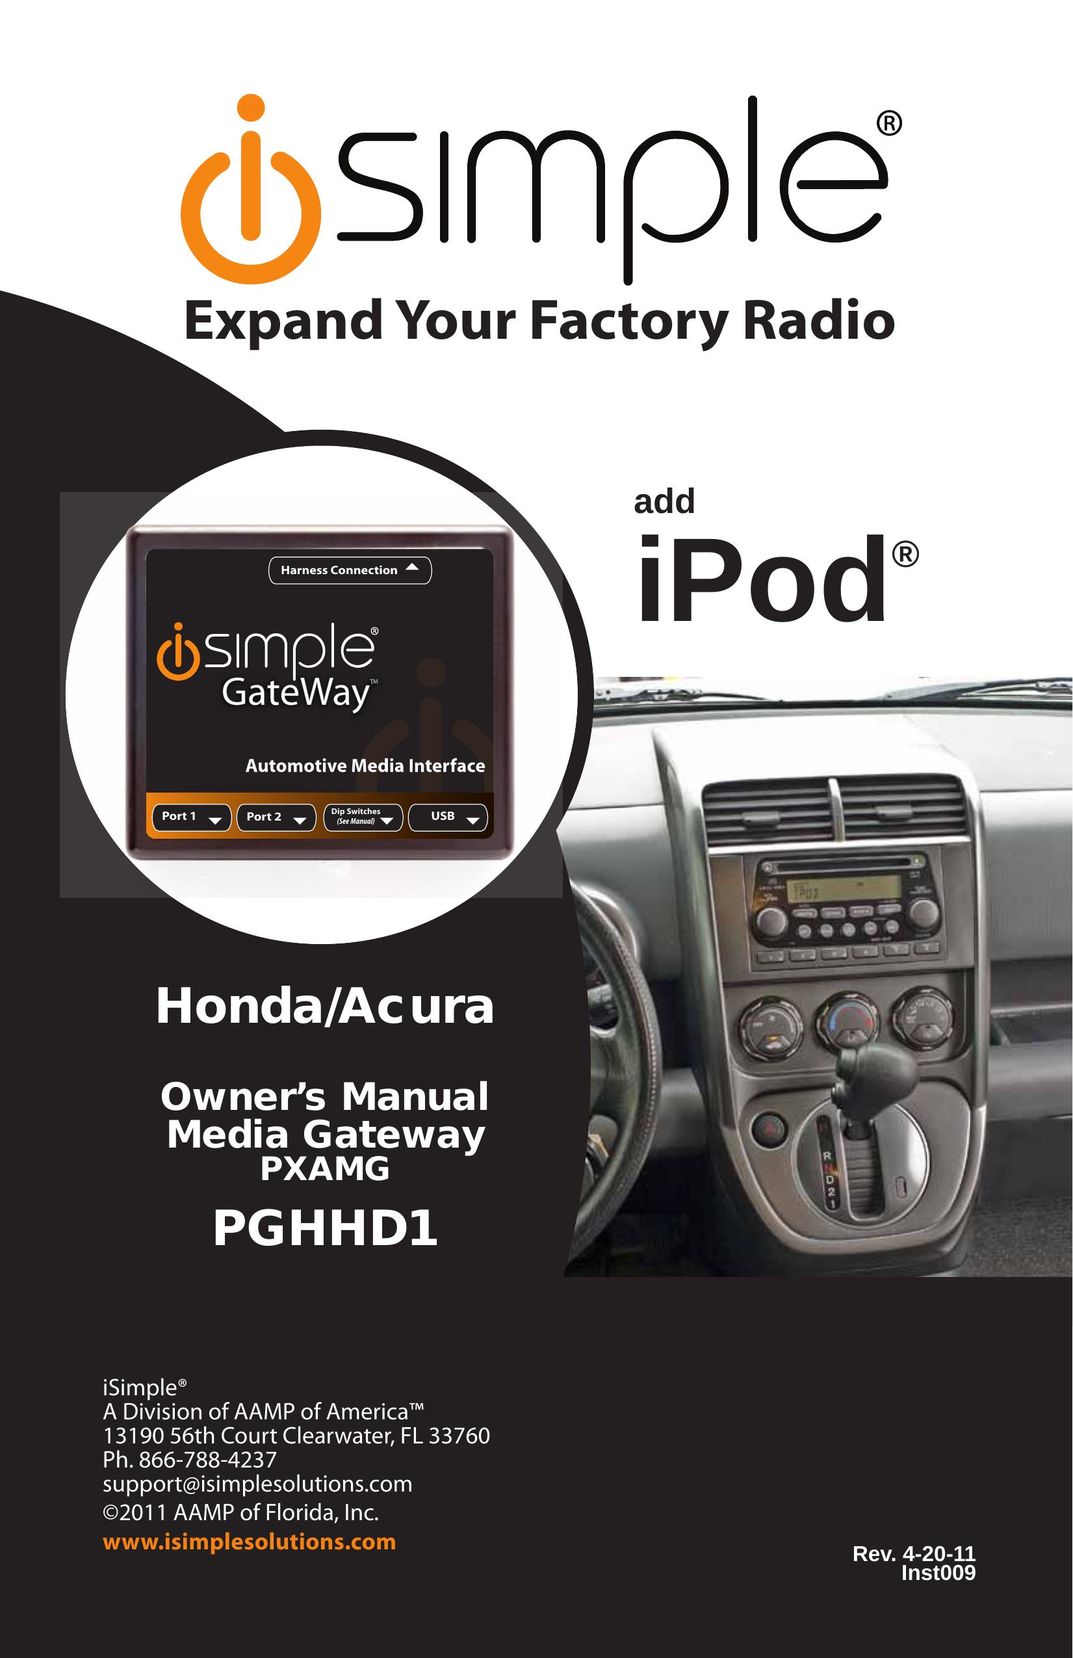 iSimple PGHHD1 Car Satellite Radio System User Manual